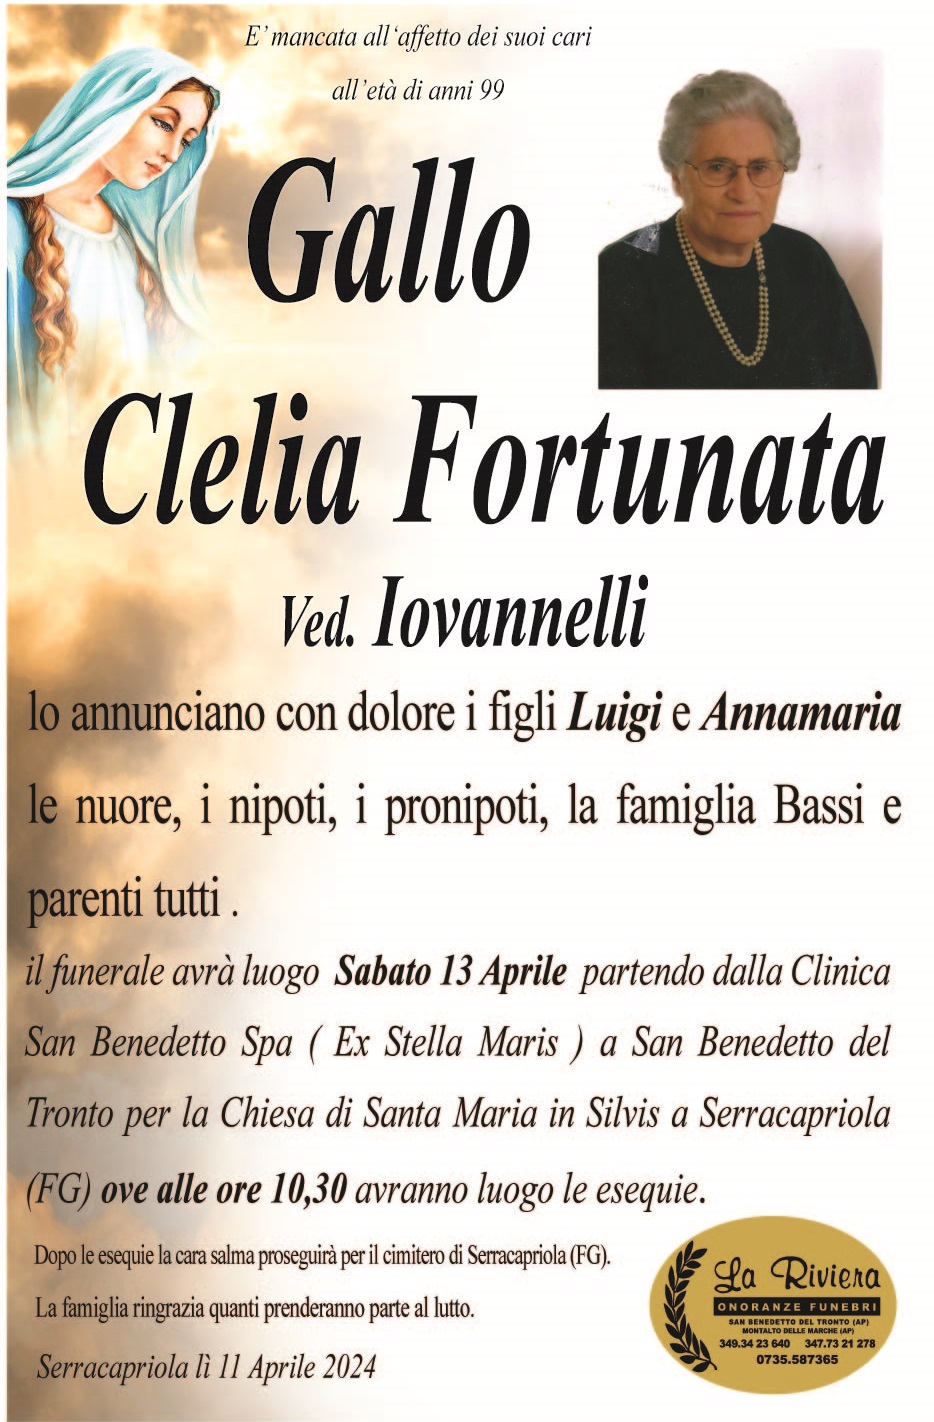 Clelia Fortunata Gallo